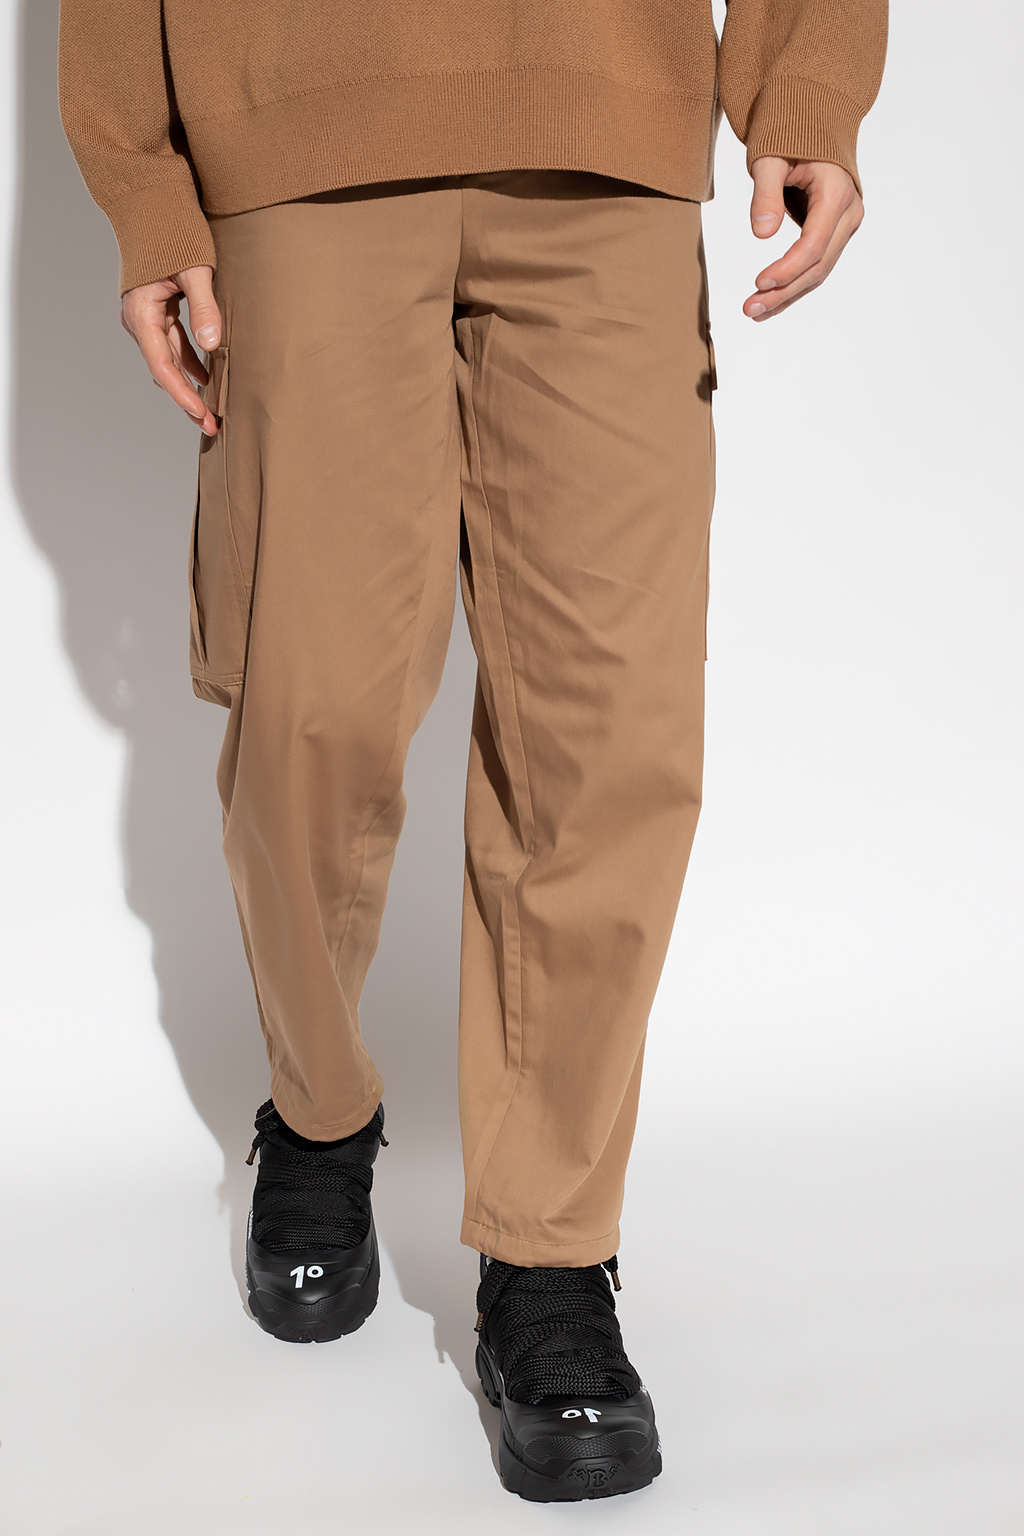 Burberry ‘Capleton’ trousers